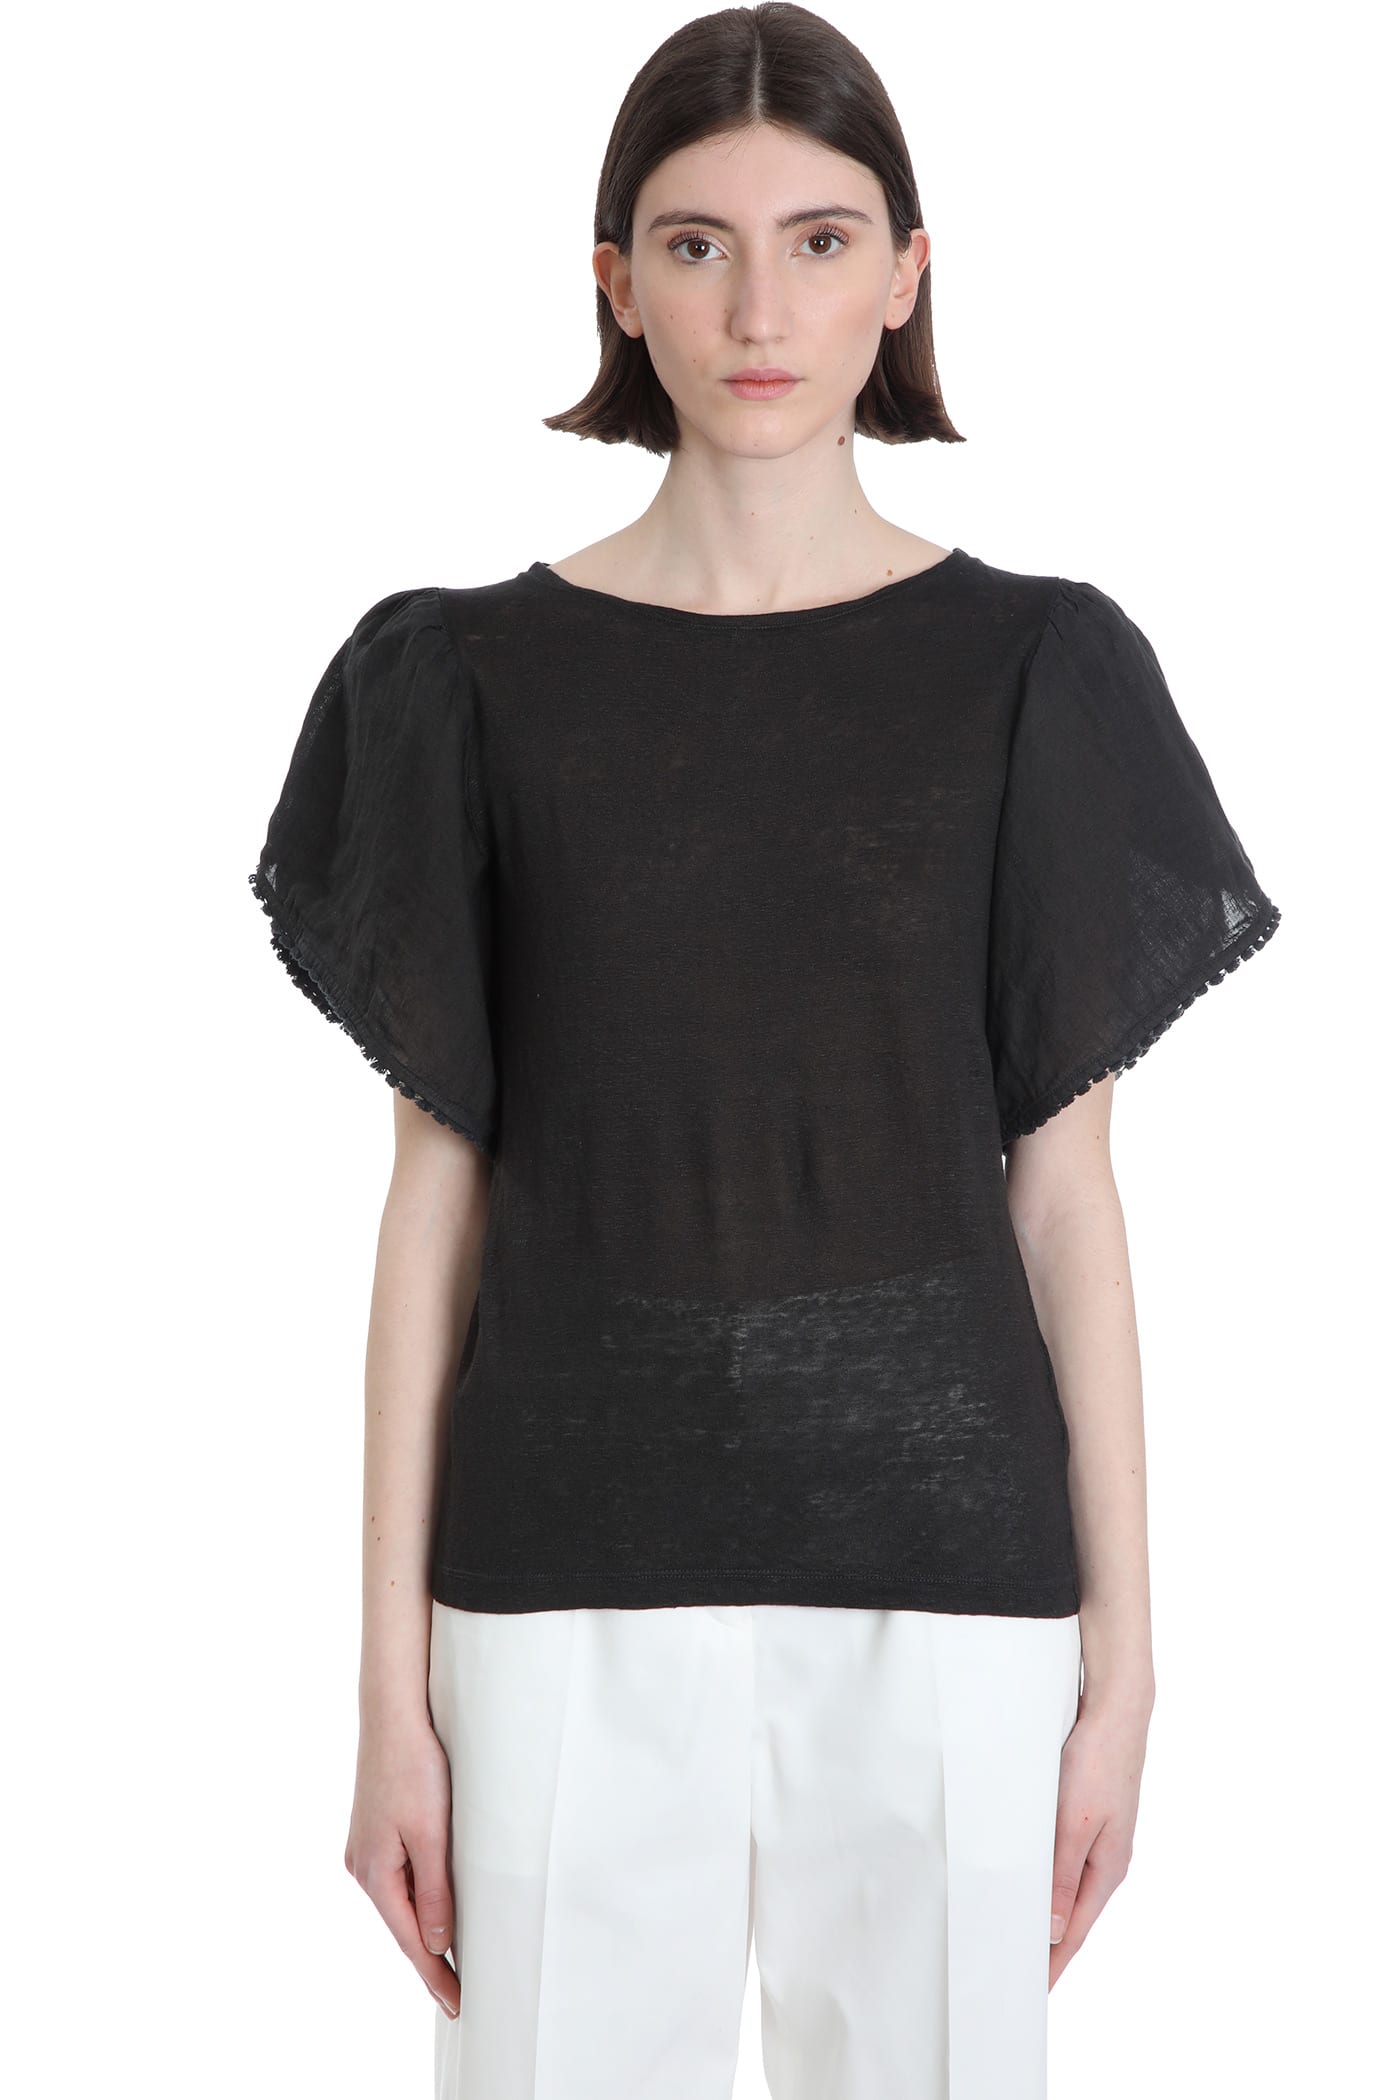 120 Lino - 120% lino blouse in black linen